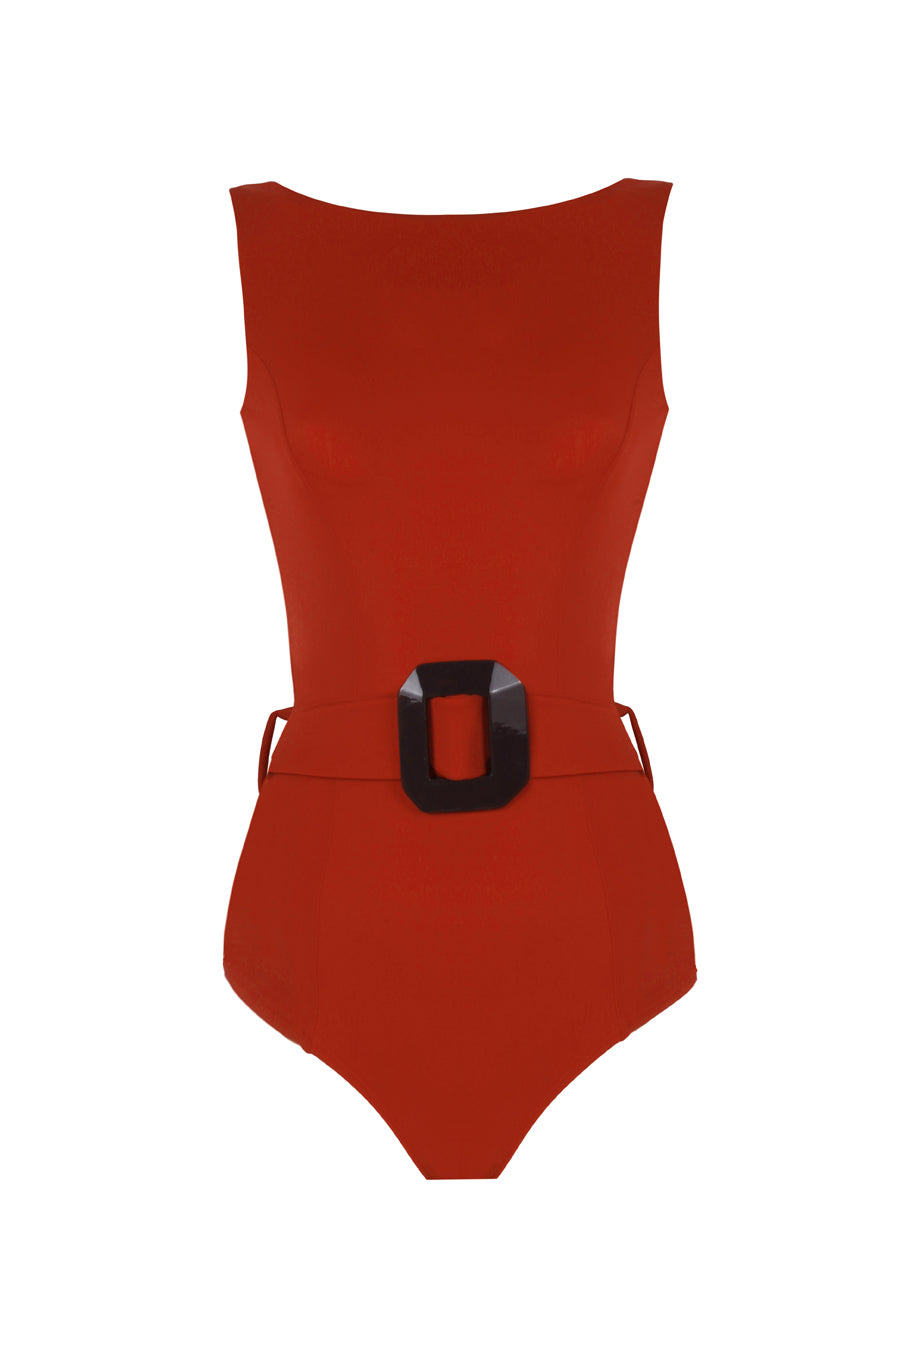 Chloe Poppy Red Swimsuit